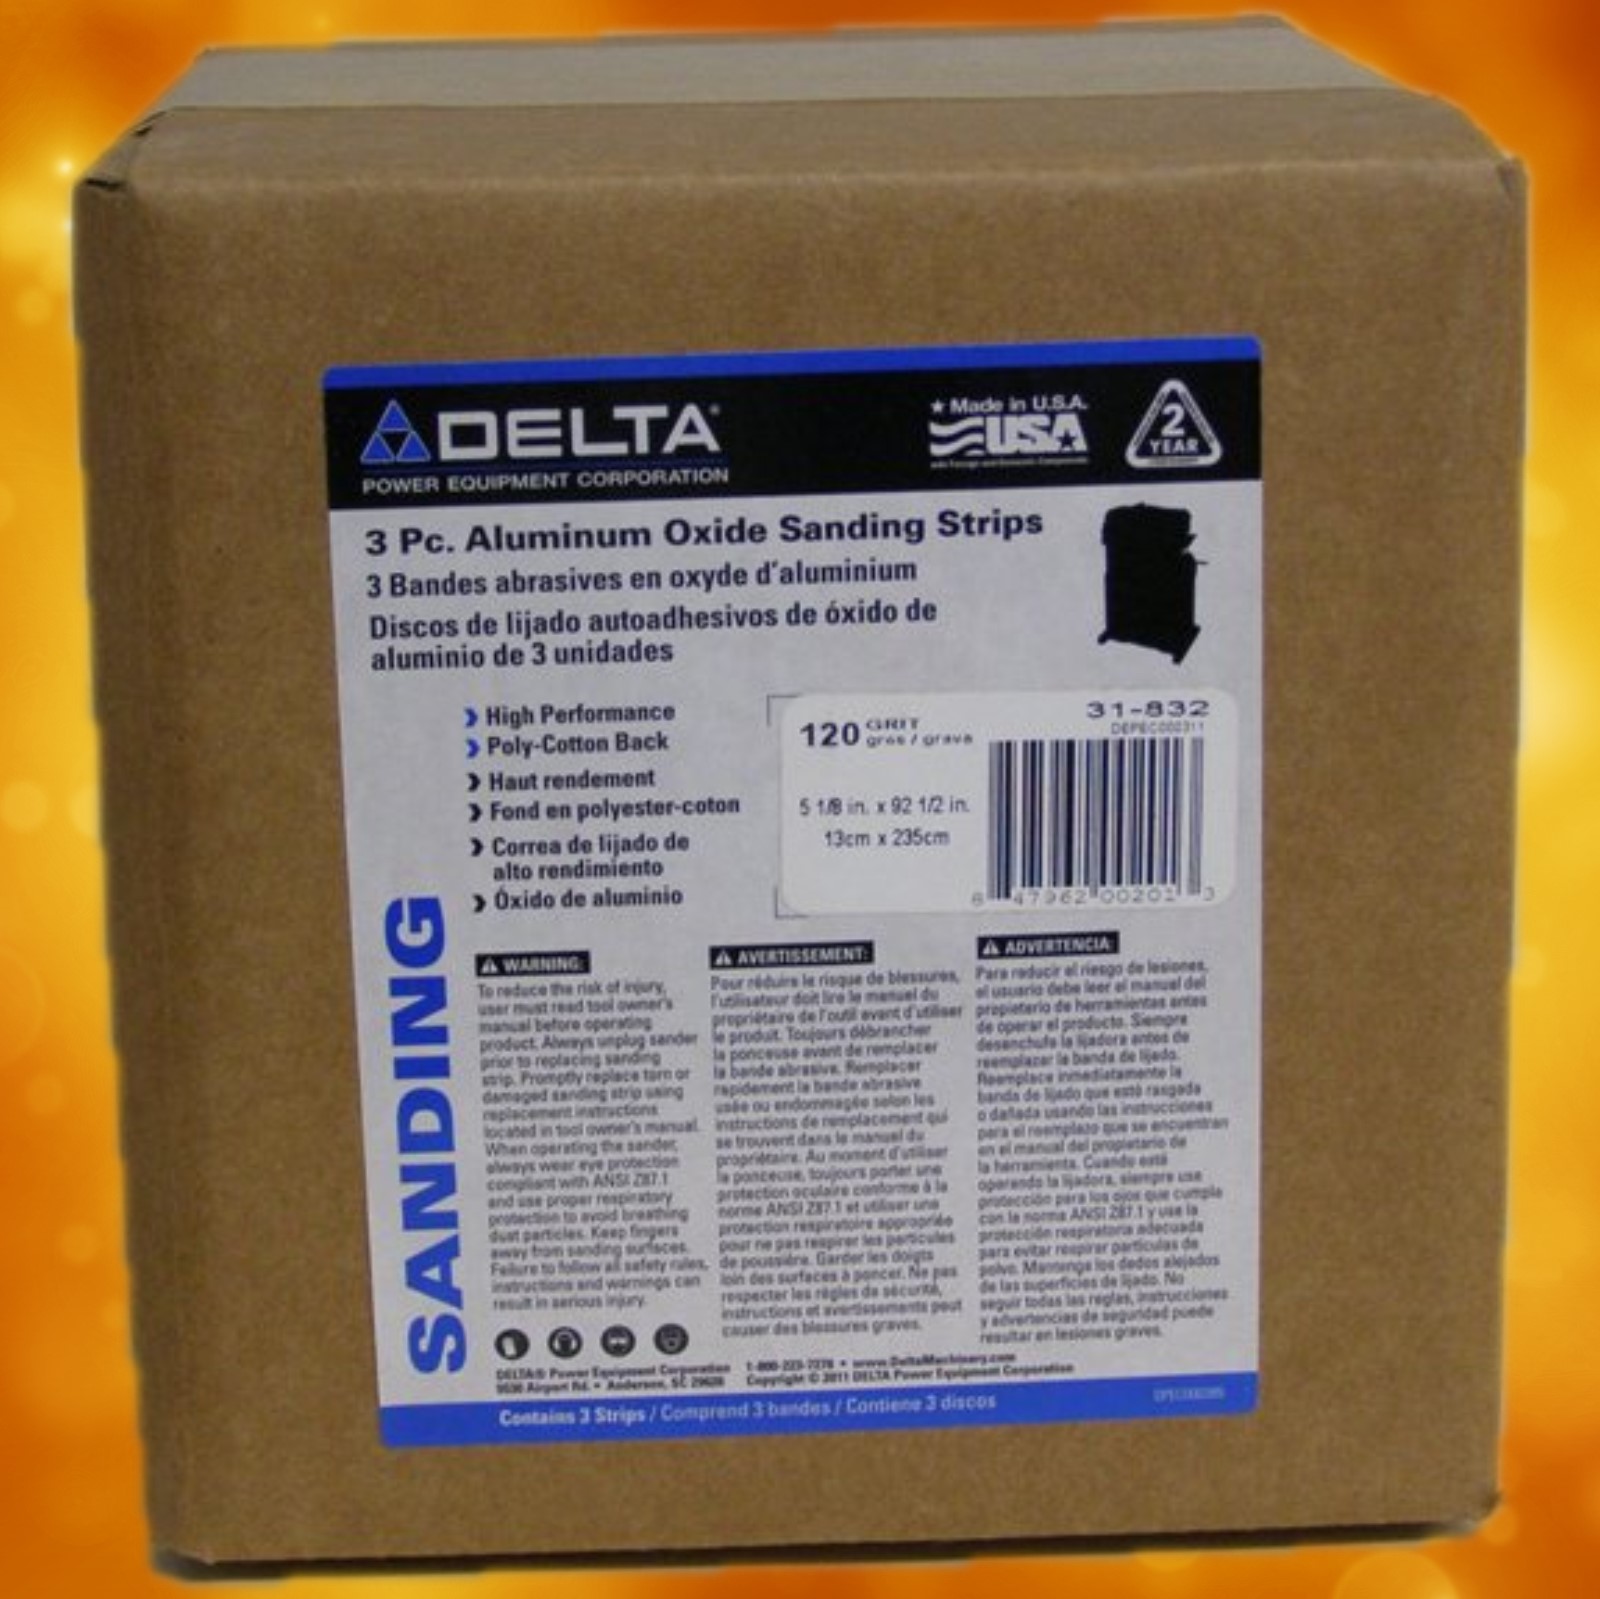 Delta 31-832 3 Pc. 5 1/8 in. x 92 1/2 in. 120 Grit Aluminum Oxide Sanding Strips 31-832